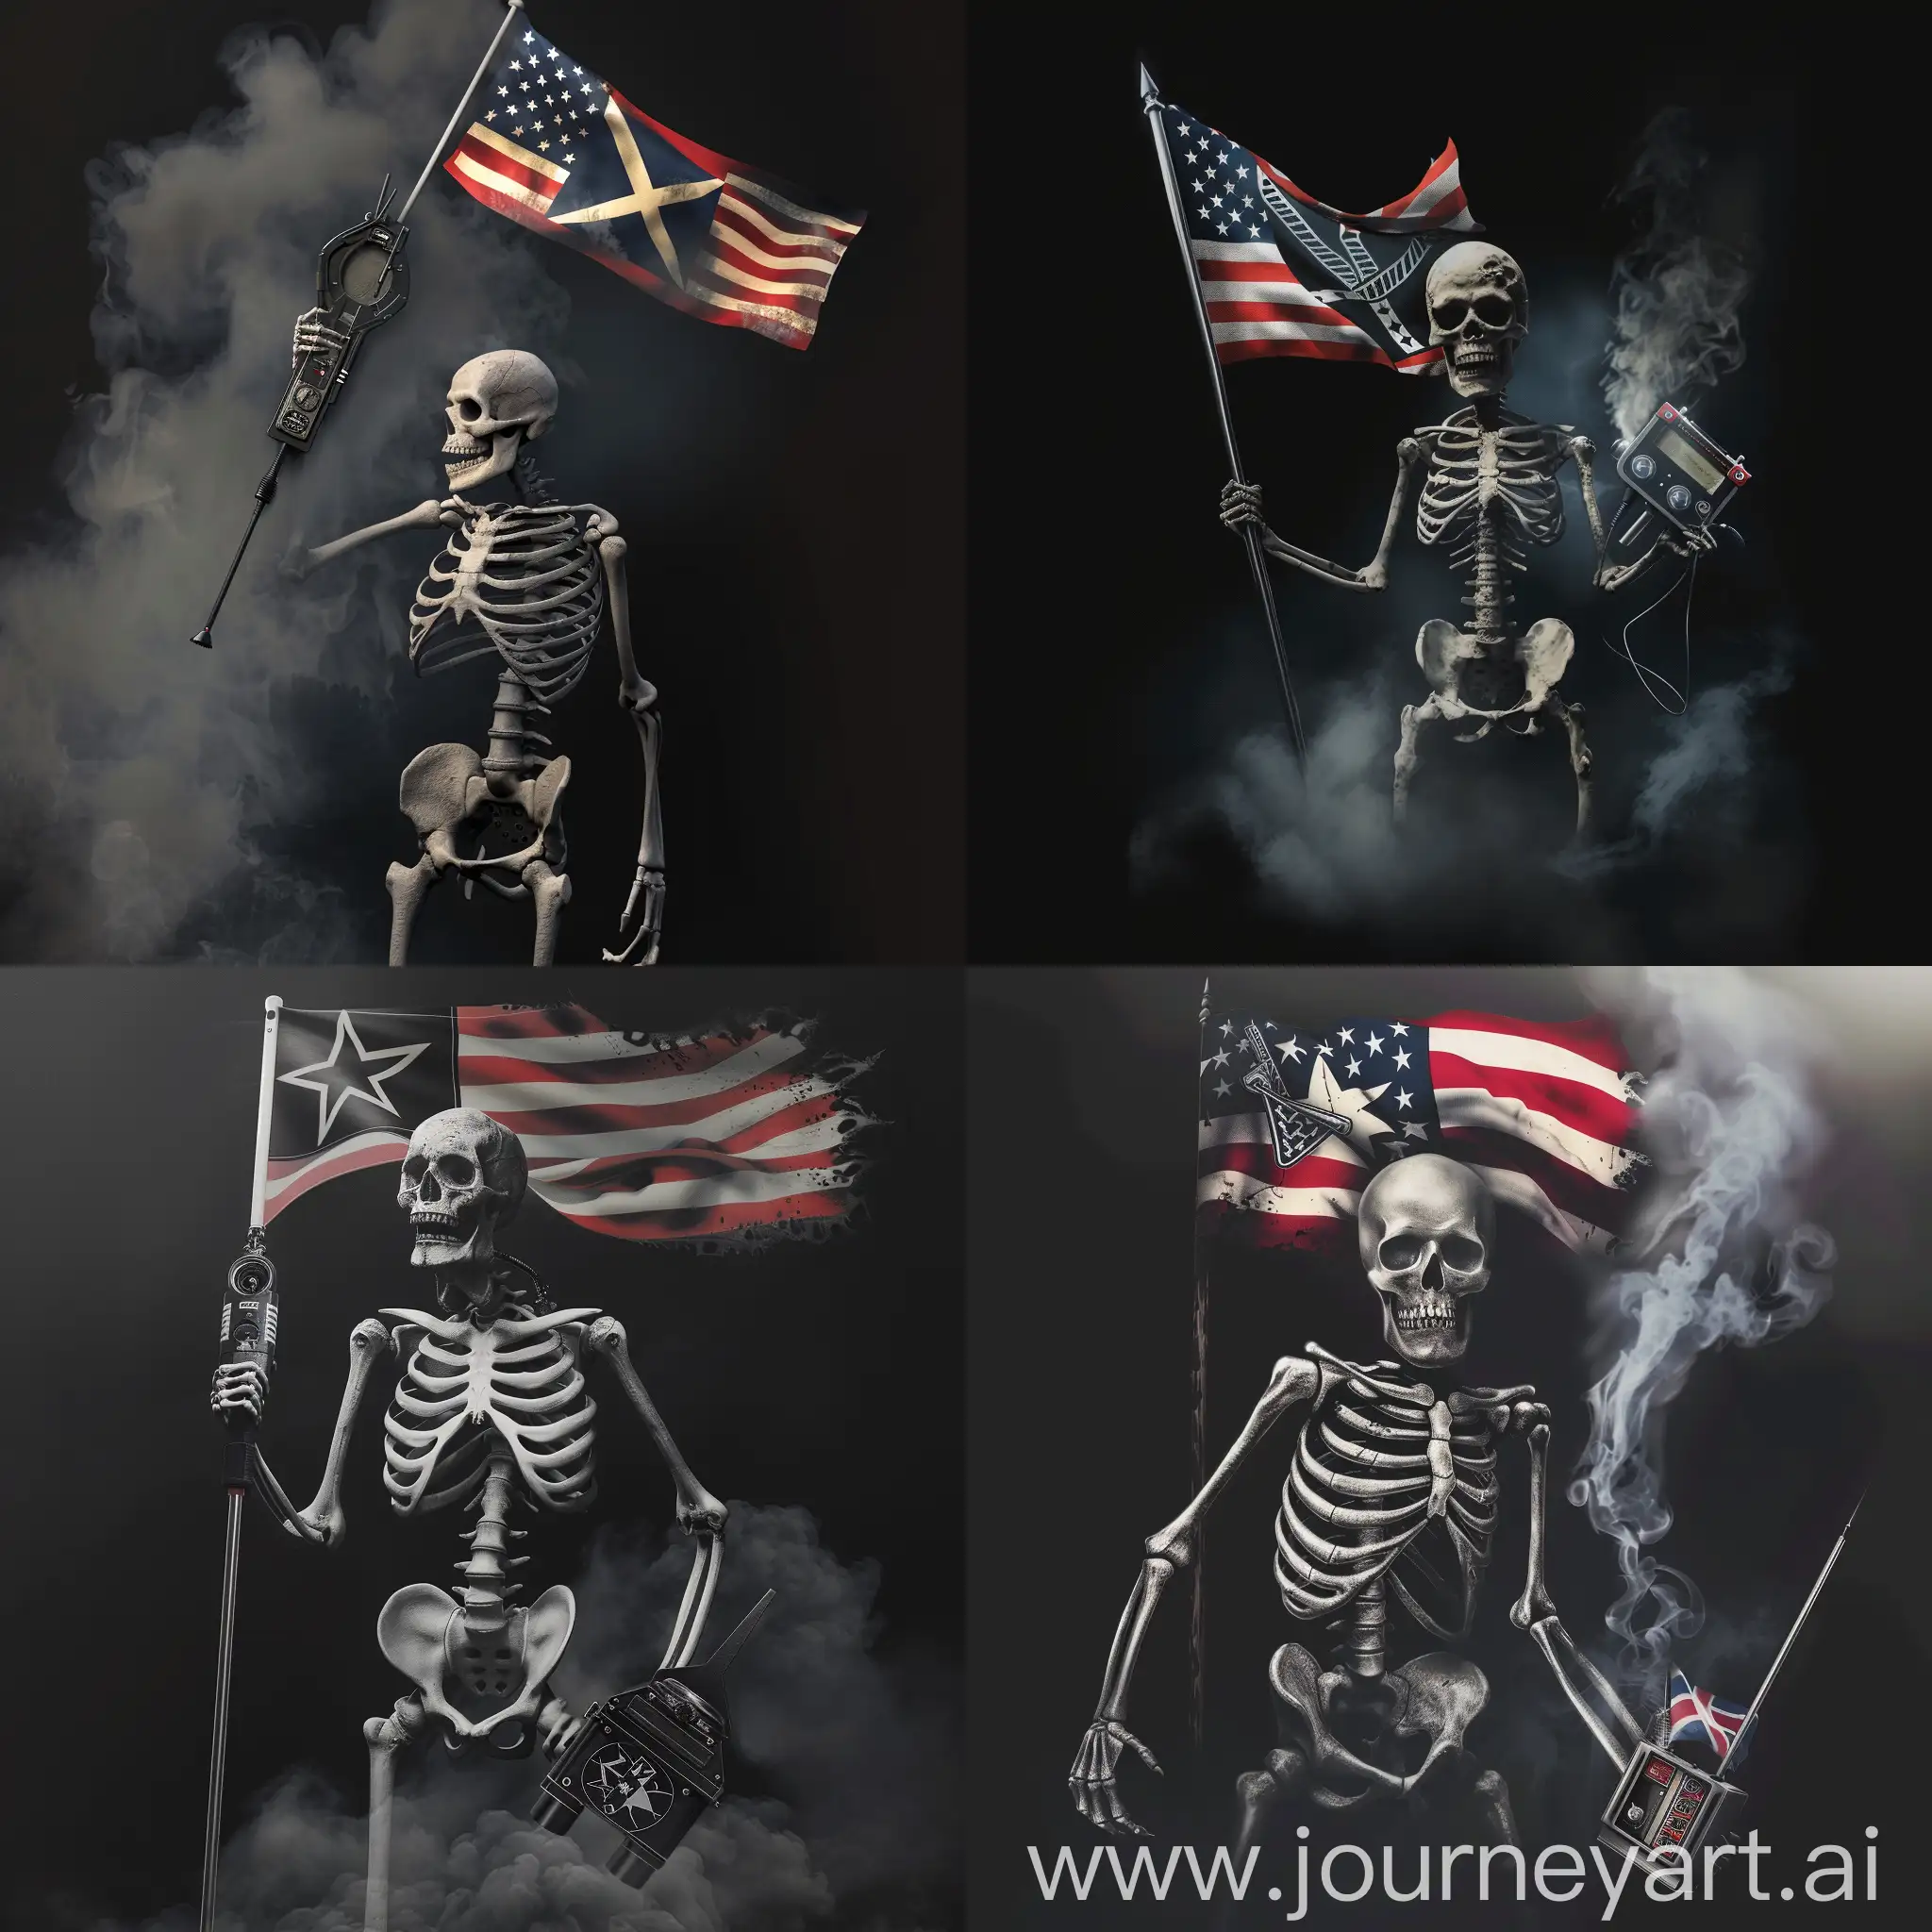 Sinister-Skeleton-with-Metal-Detector-Against-Confederate-Flag-Haze